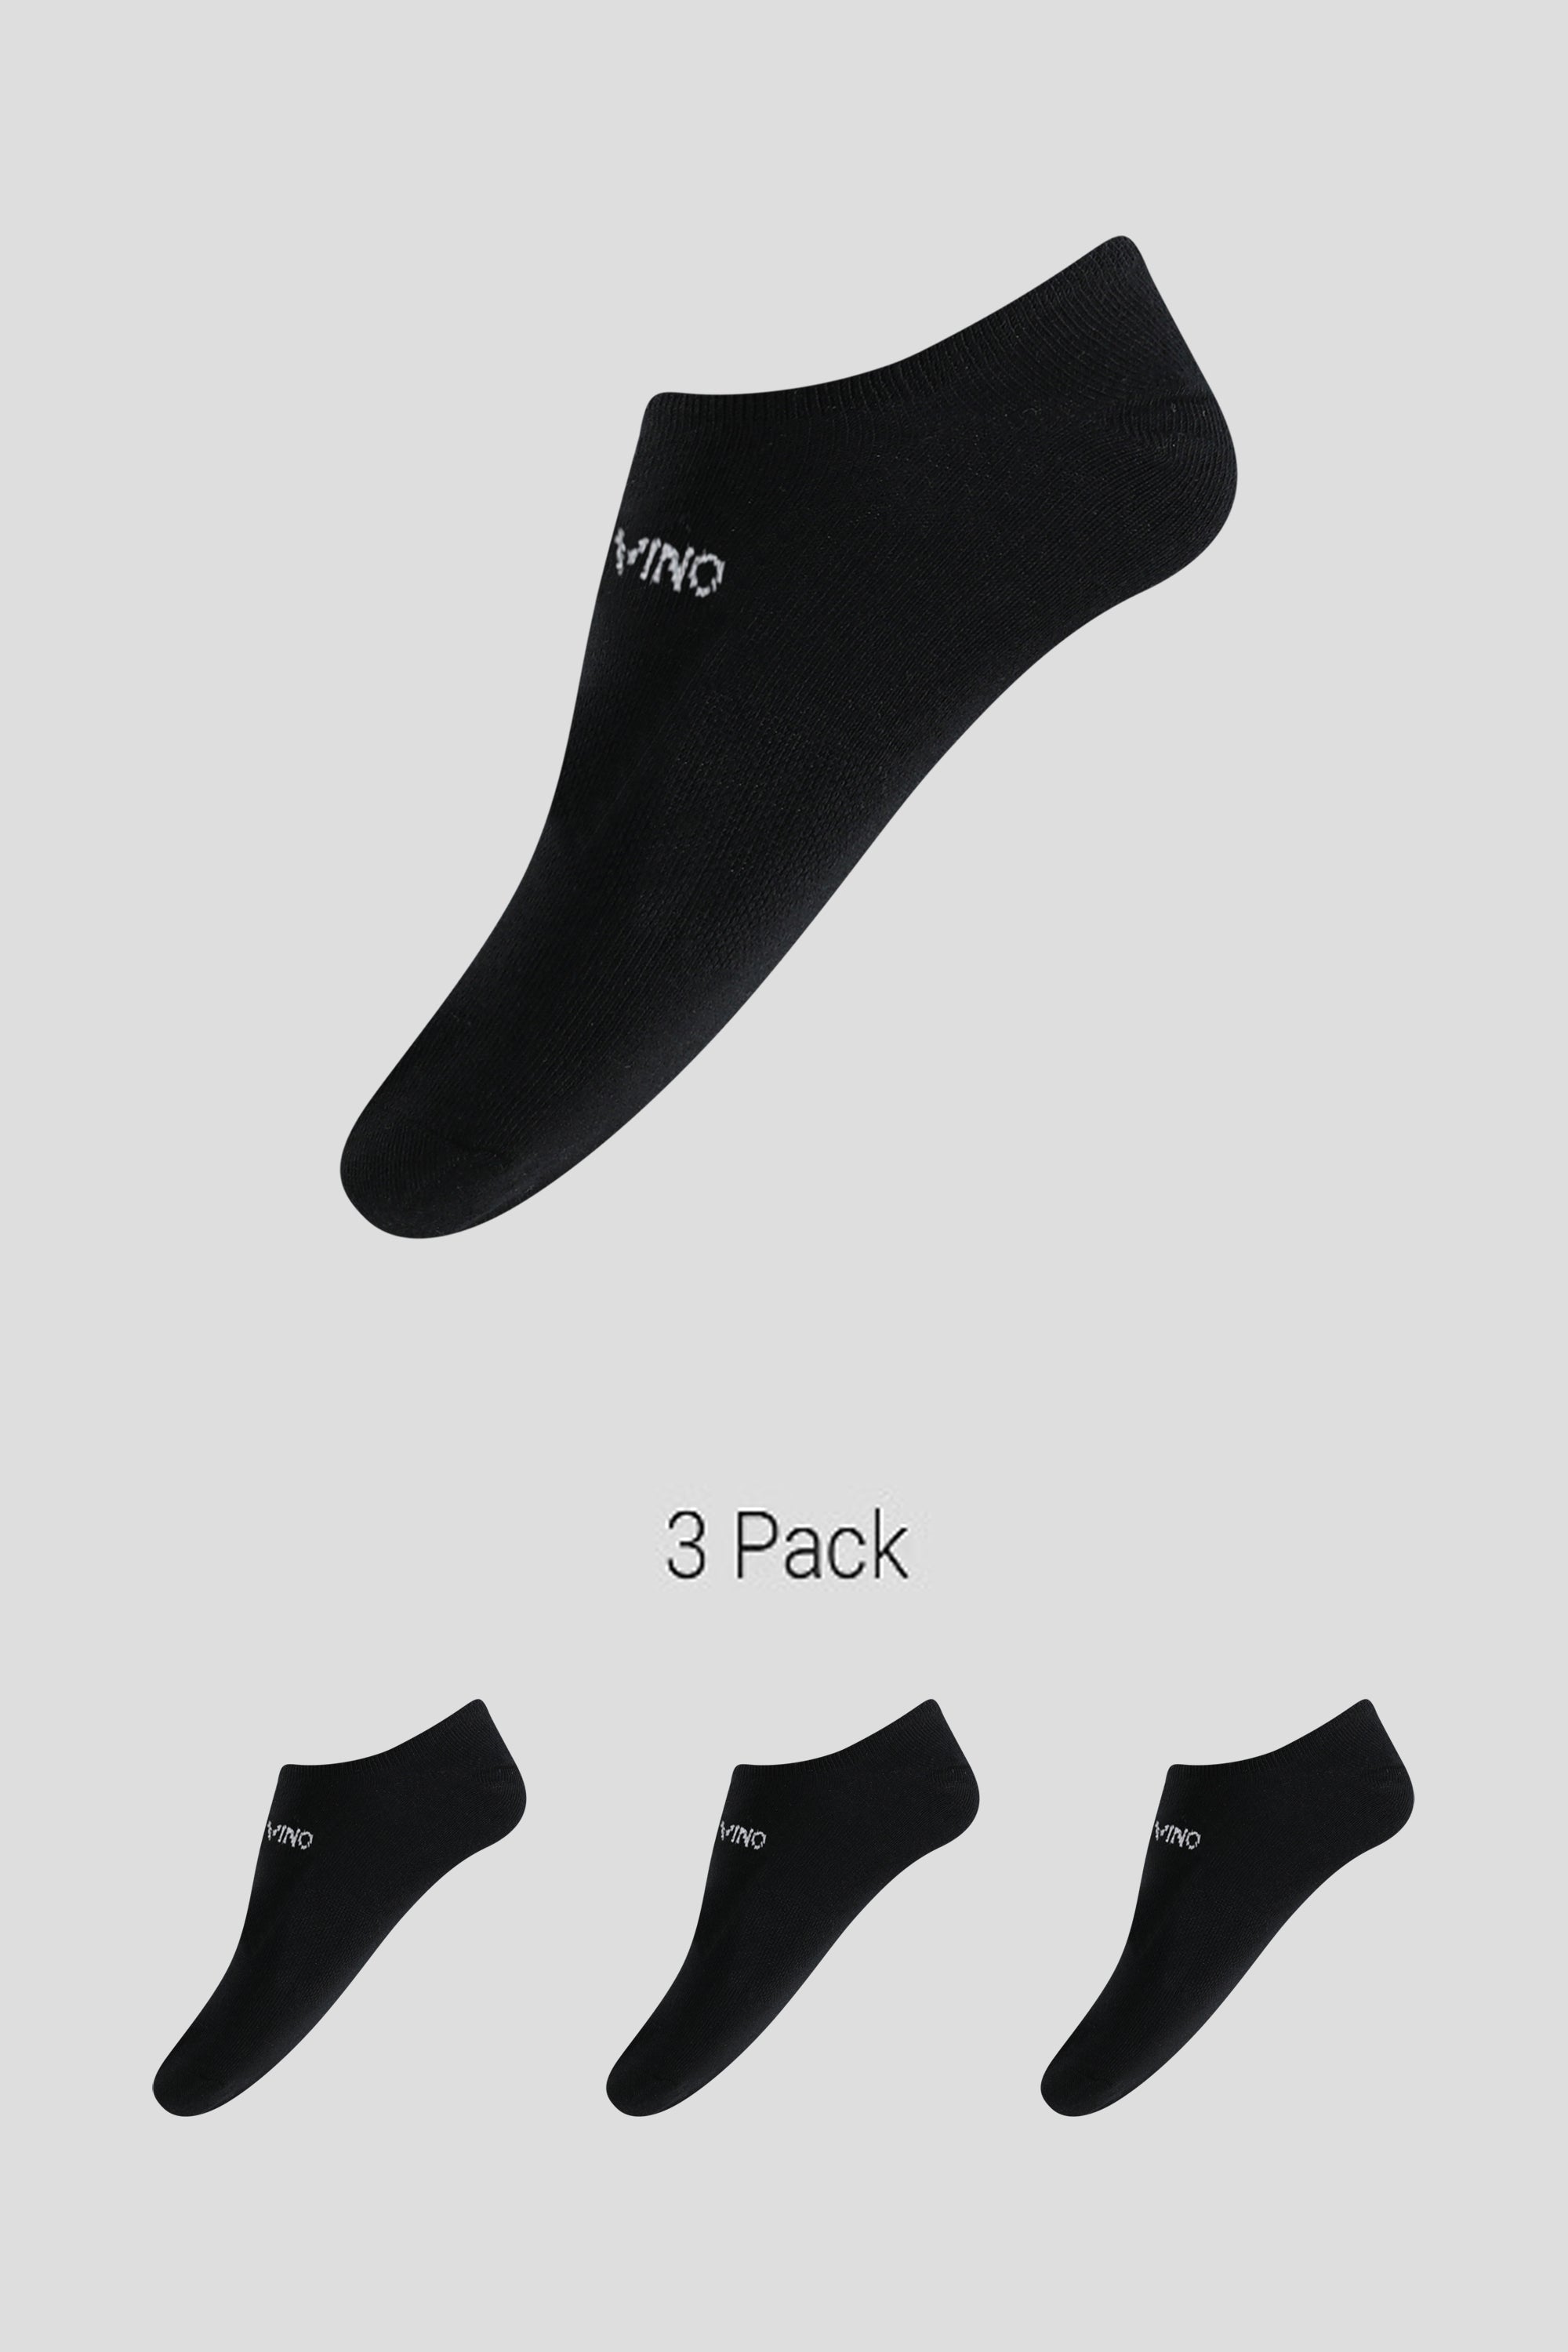 RVB 3 pack low cut sneakers socks